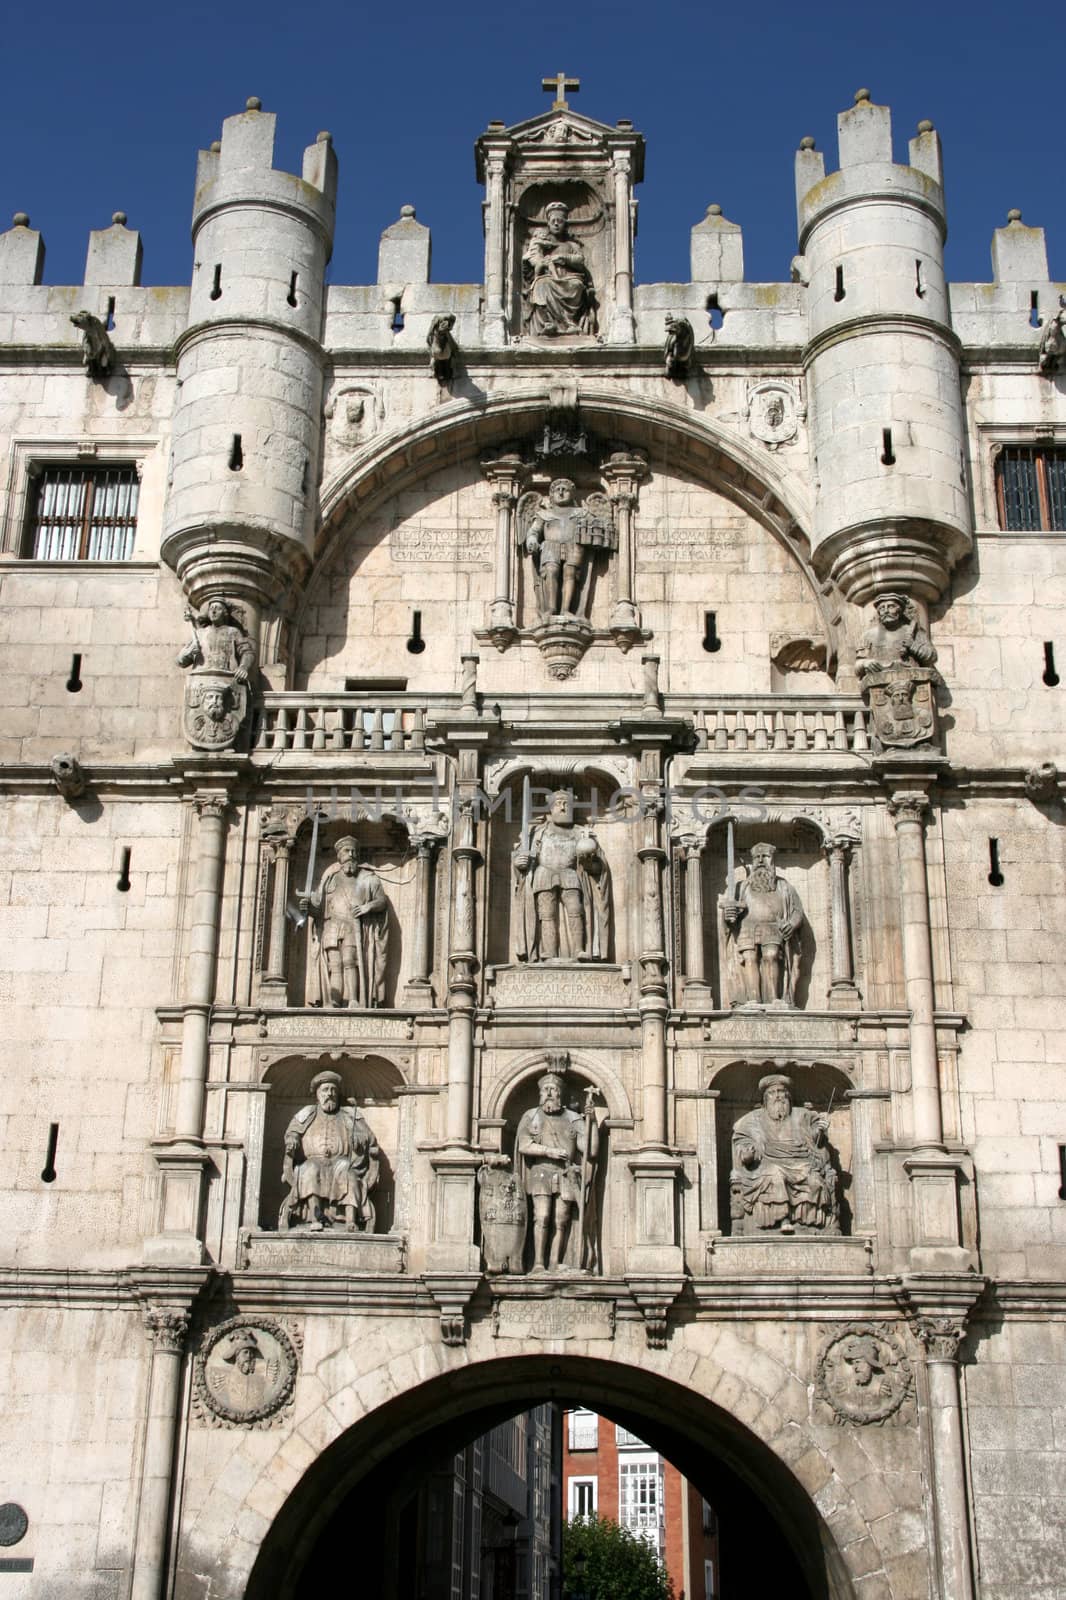 City gate in Burgos, Spain. Arco de Santa Maria.